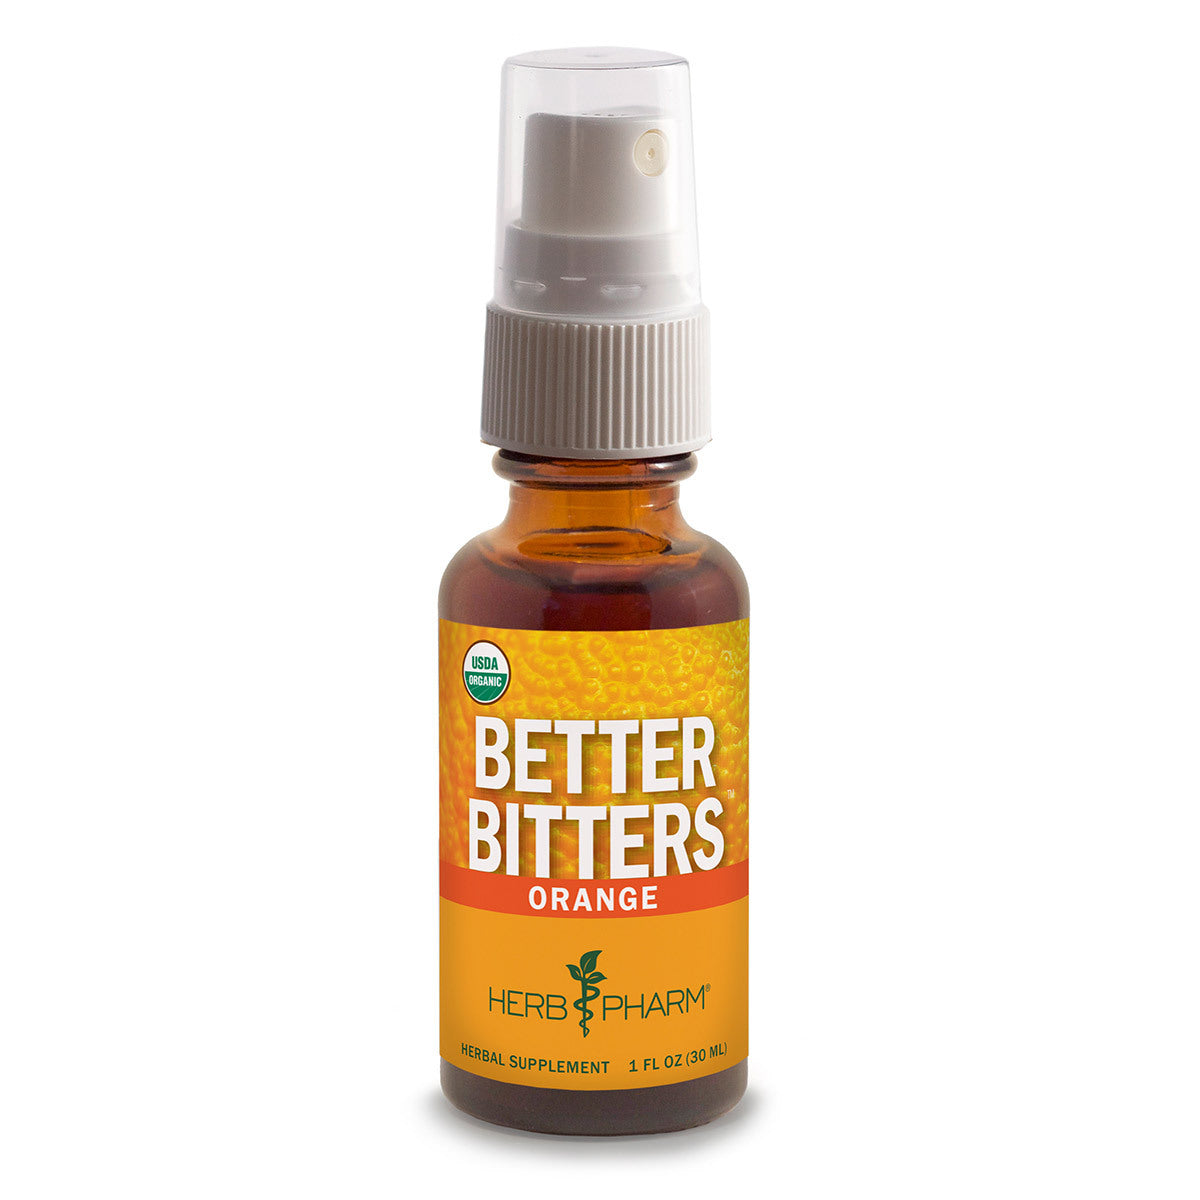 Primary image of Better Bitters - Orange